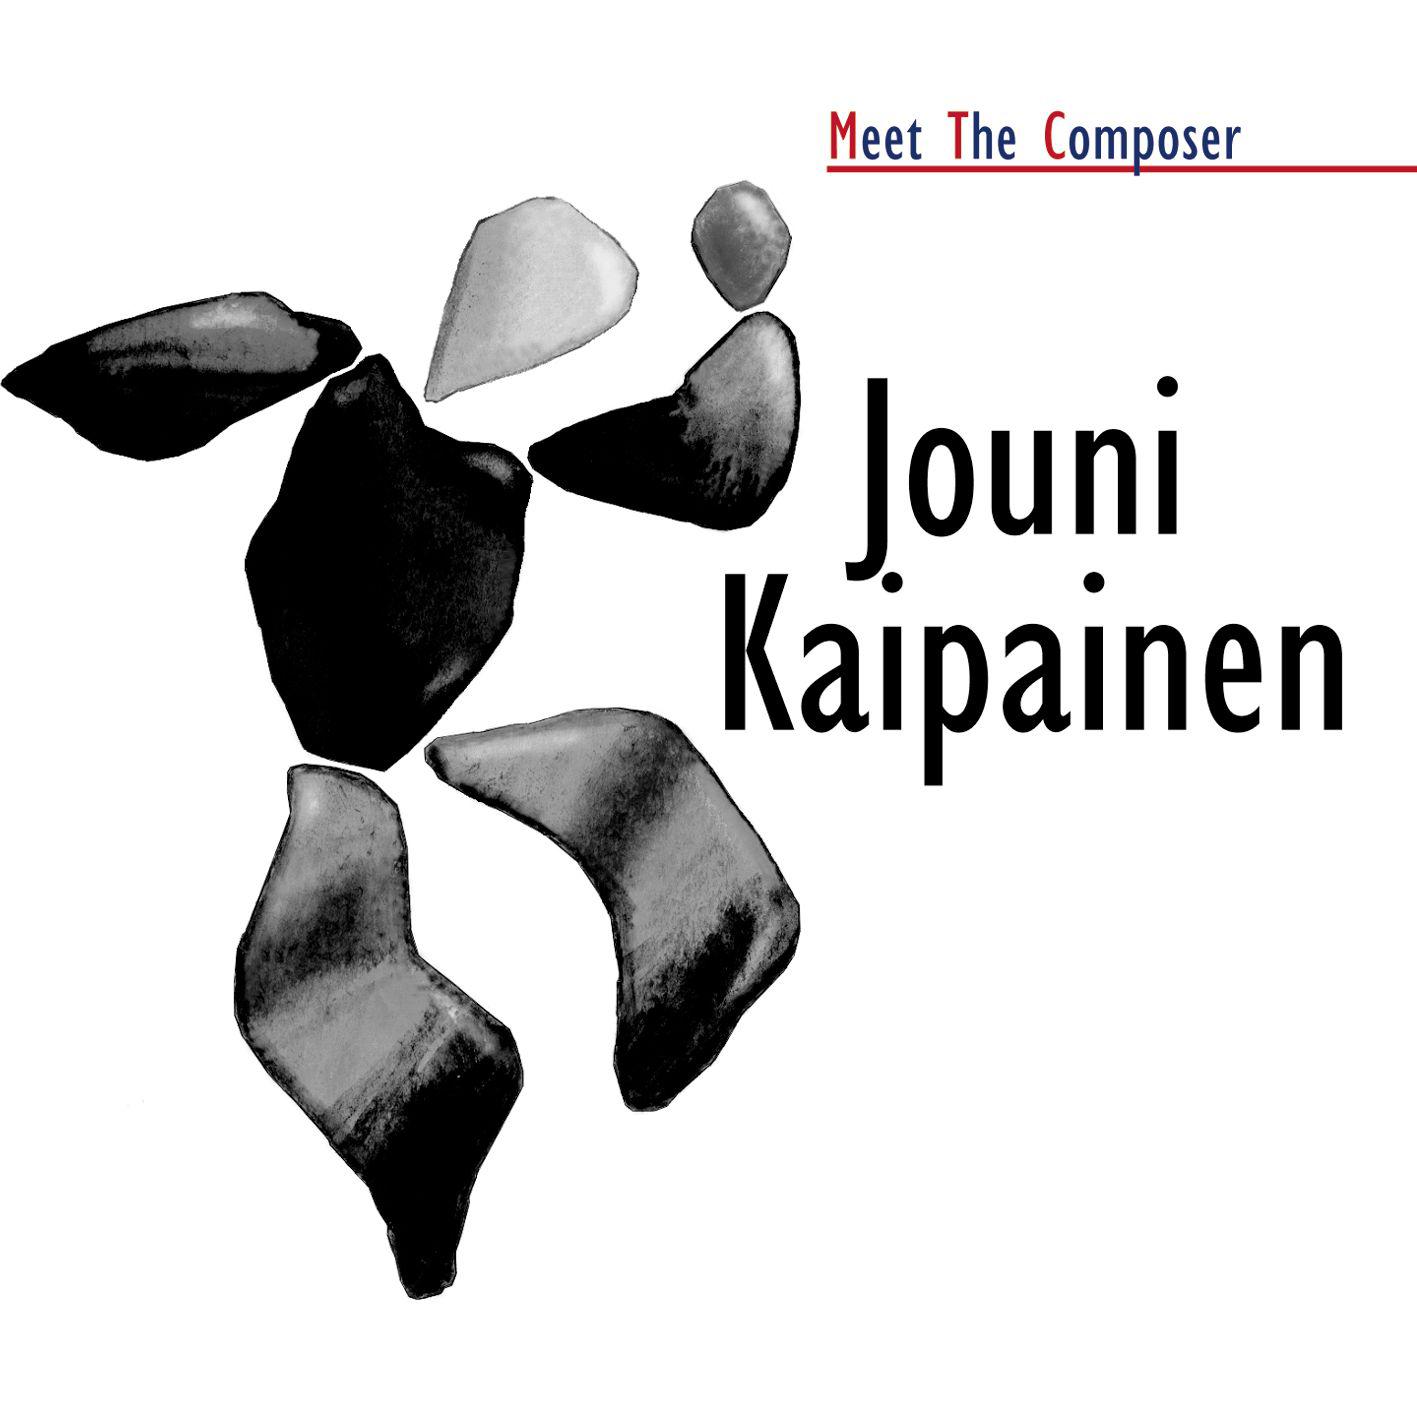 Meet The Composer - Jouni Kaipainen